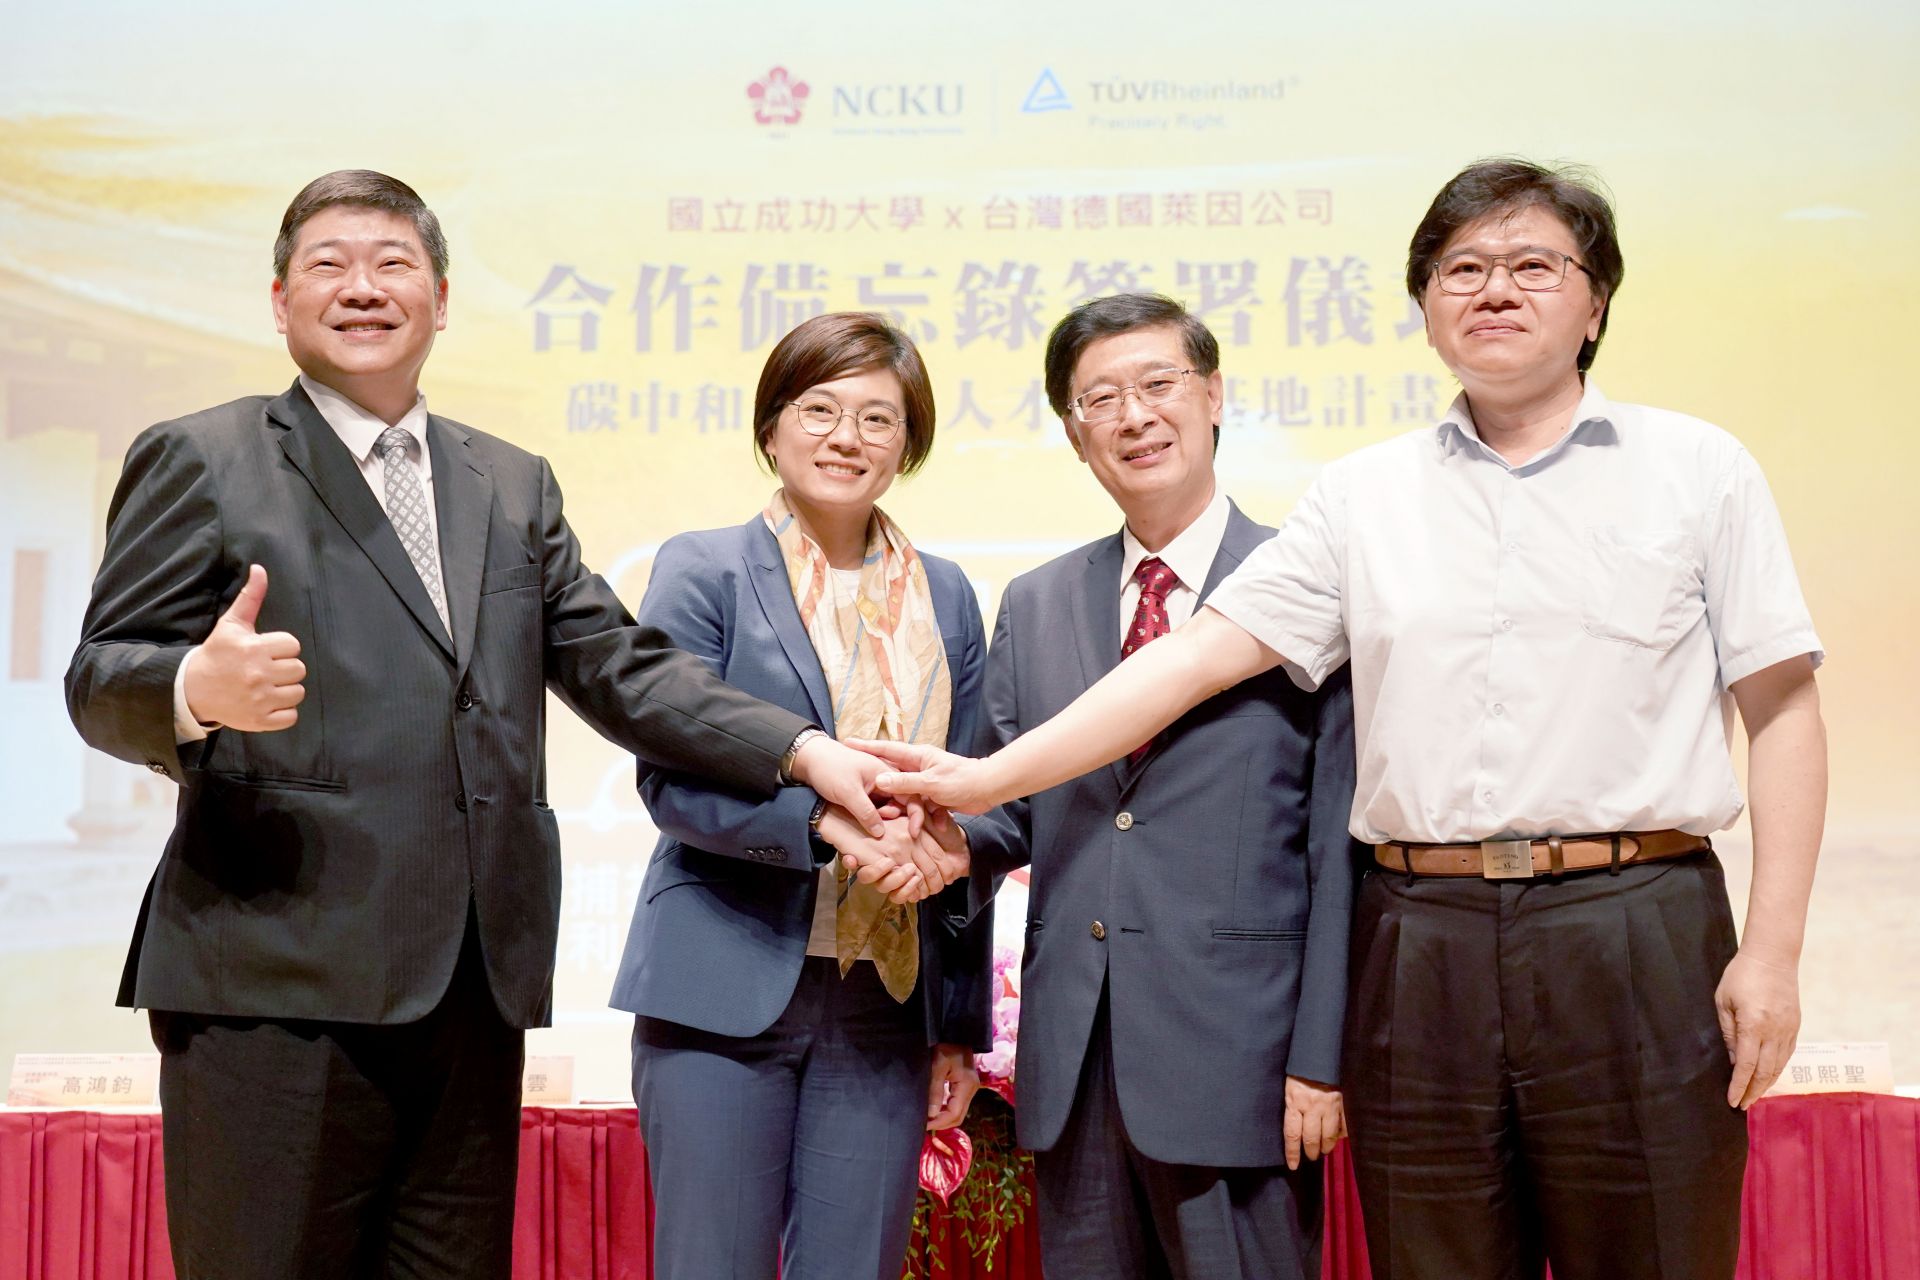 Nurturing Net-Zero Talents to Build Taiwan's Green Economy, NCKU and TÜV Rheinland Sign Memorandum of Understanding